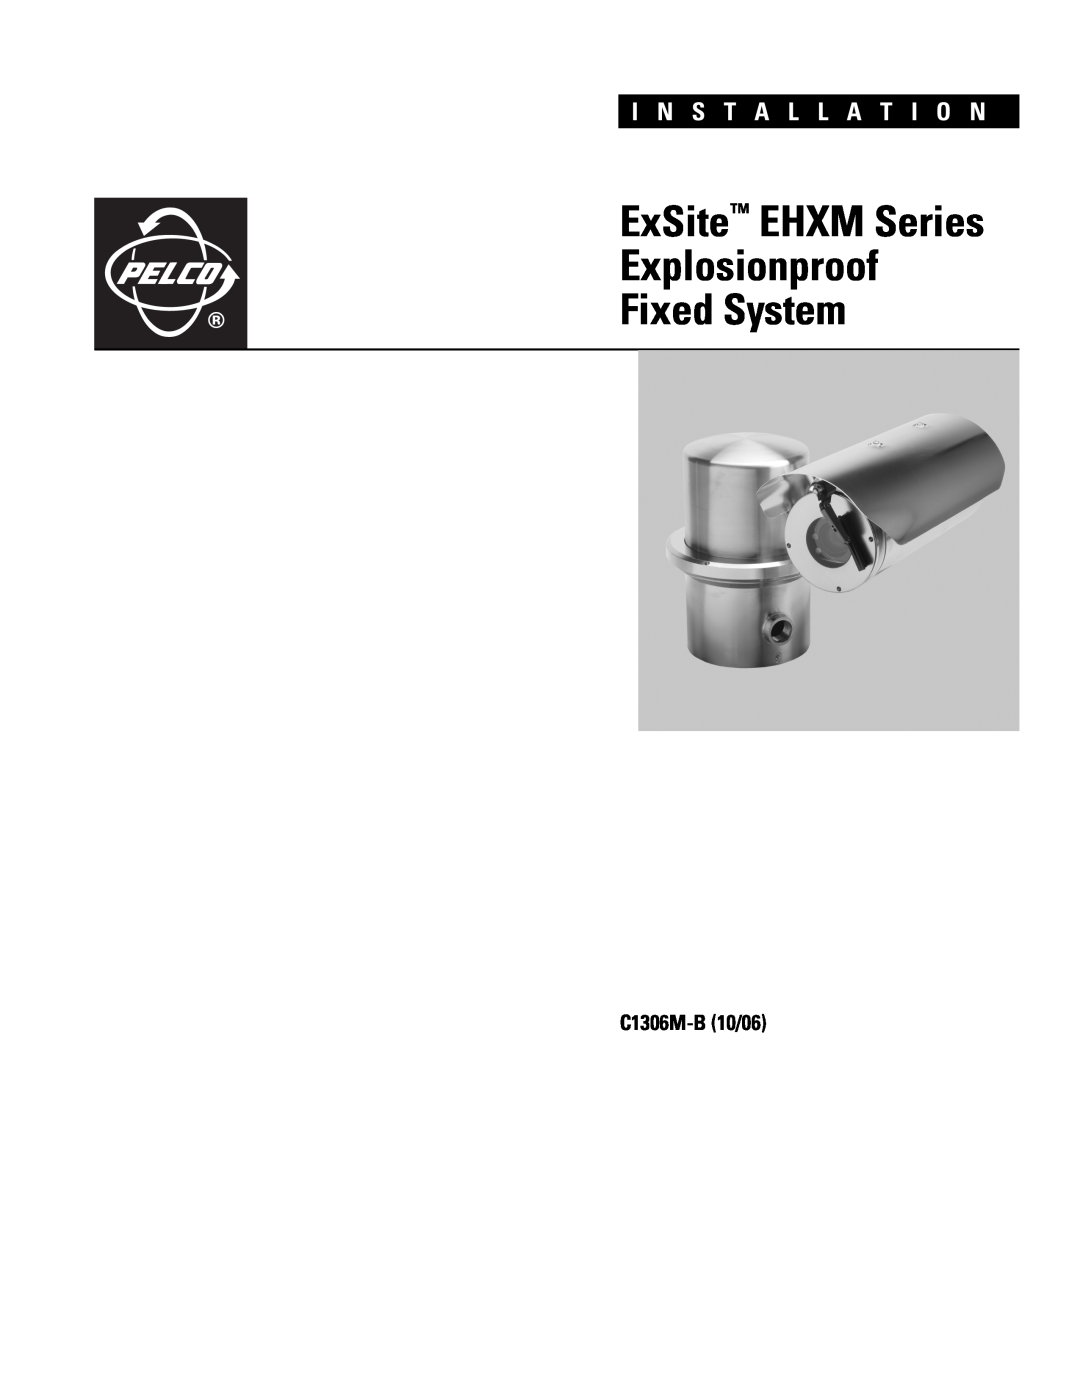 Pelco 2 C1306M-B (10/06) manual C1306M-B10/06, ExSite EHXM Series Explosionproof Fixed System, I N S T A L L A T I O N 